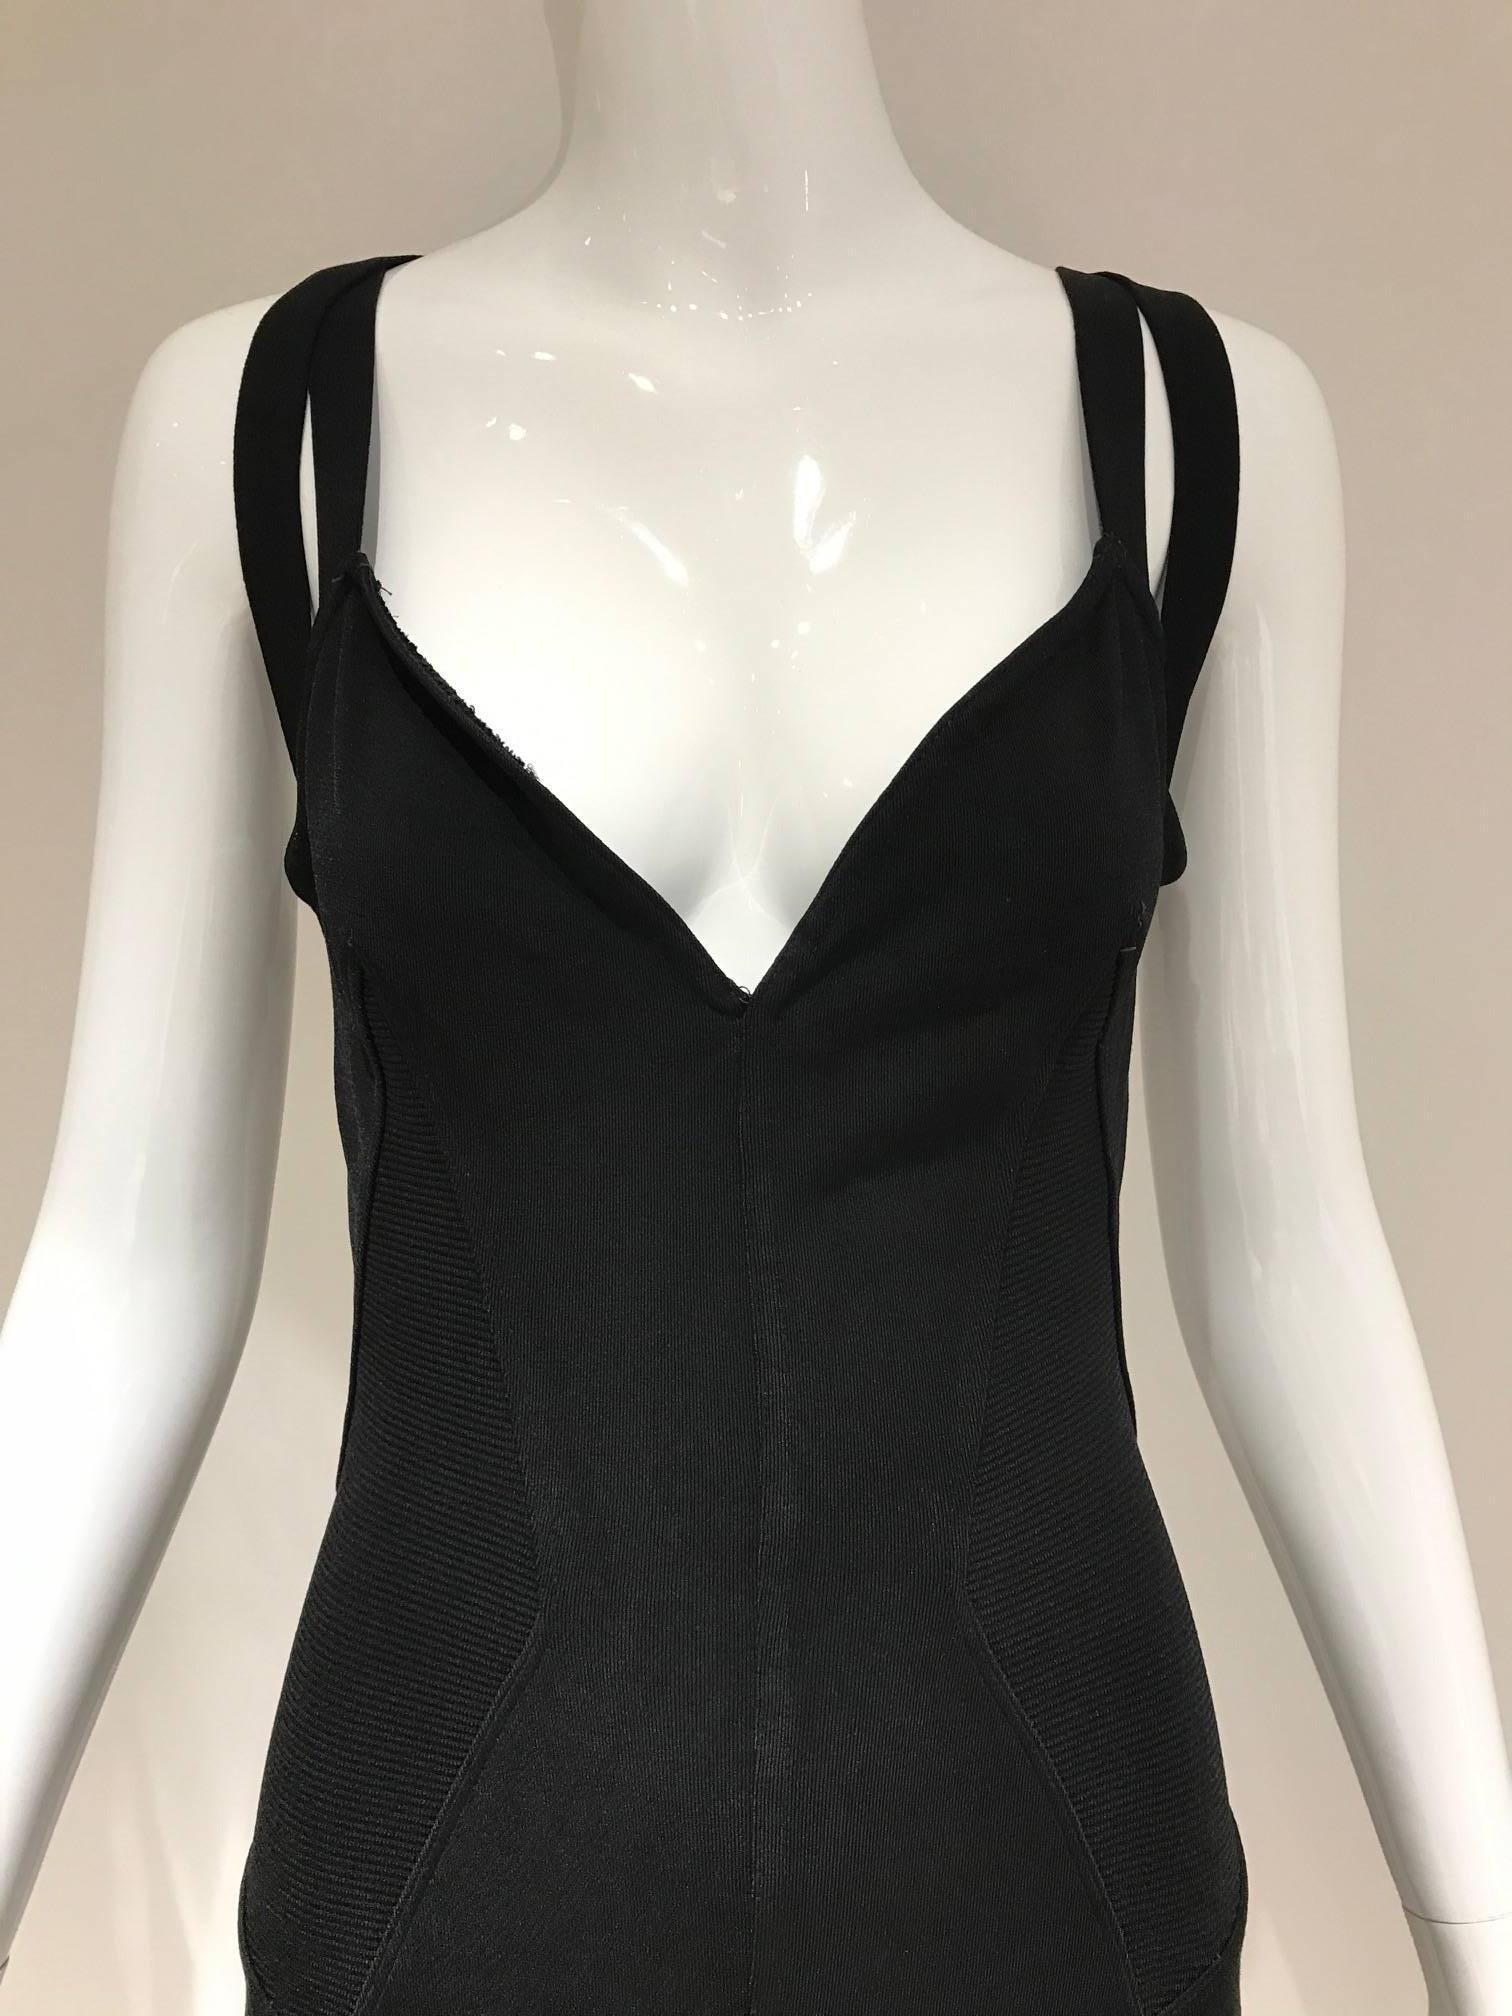 Vintage 1990s  ALAIA Black Knit Dress with Criss Cross Back 90s Dress
Size S. Fit US size 2/4/6 